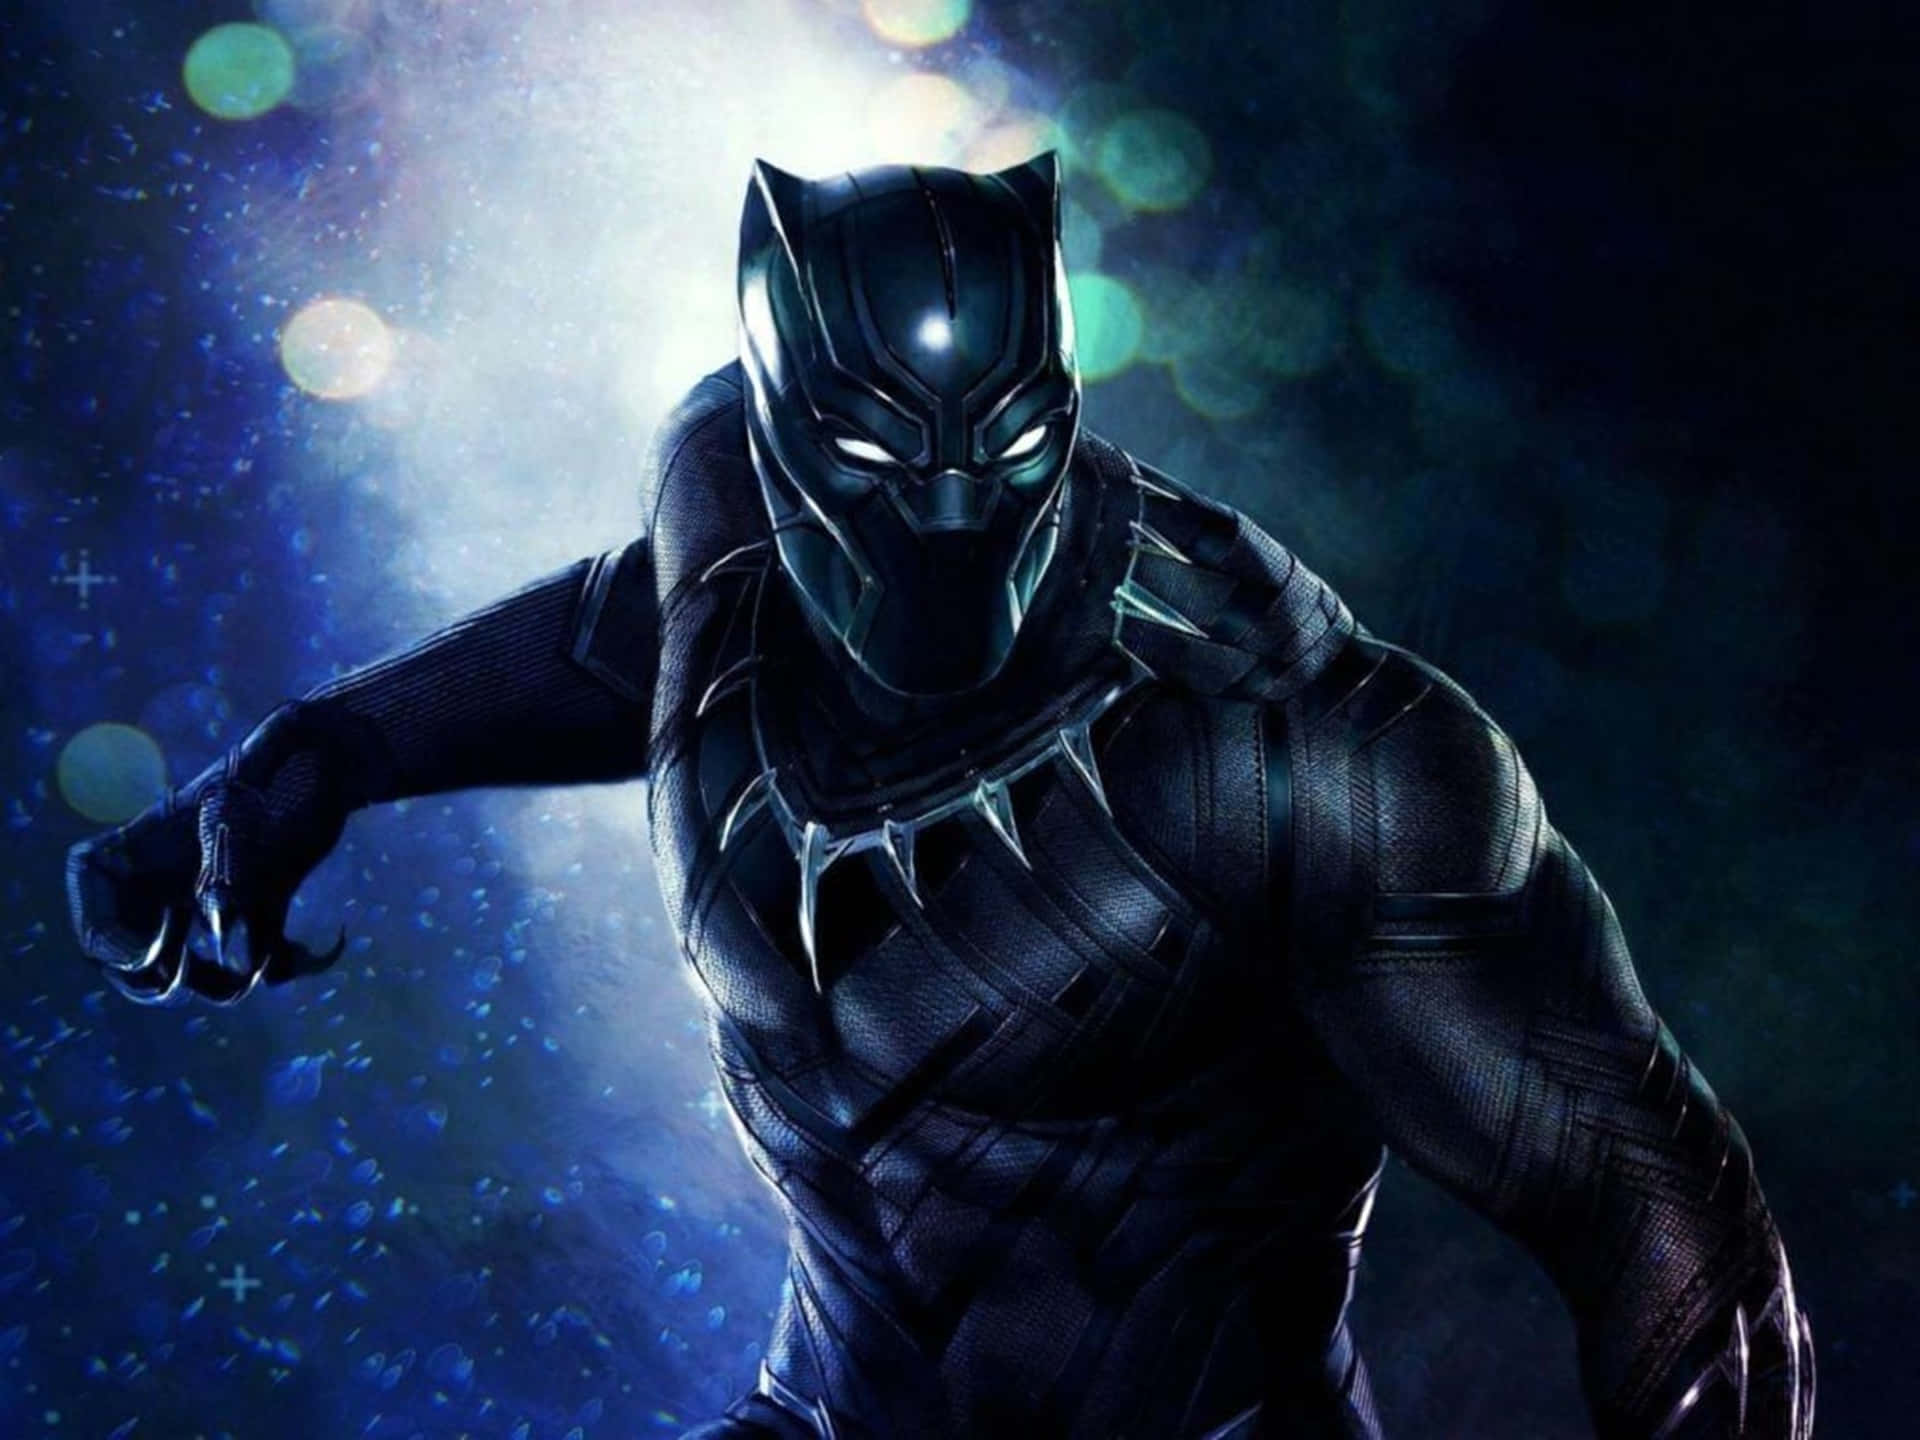 4K Superhero Marvel's Black Panther Wallpaper